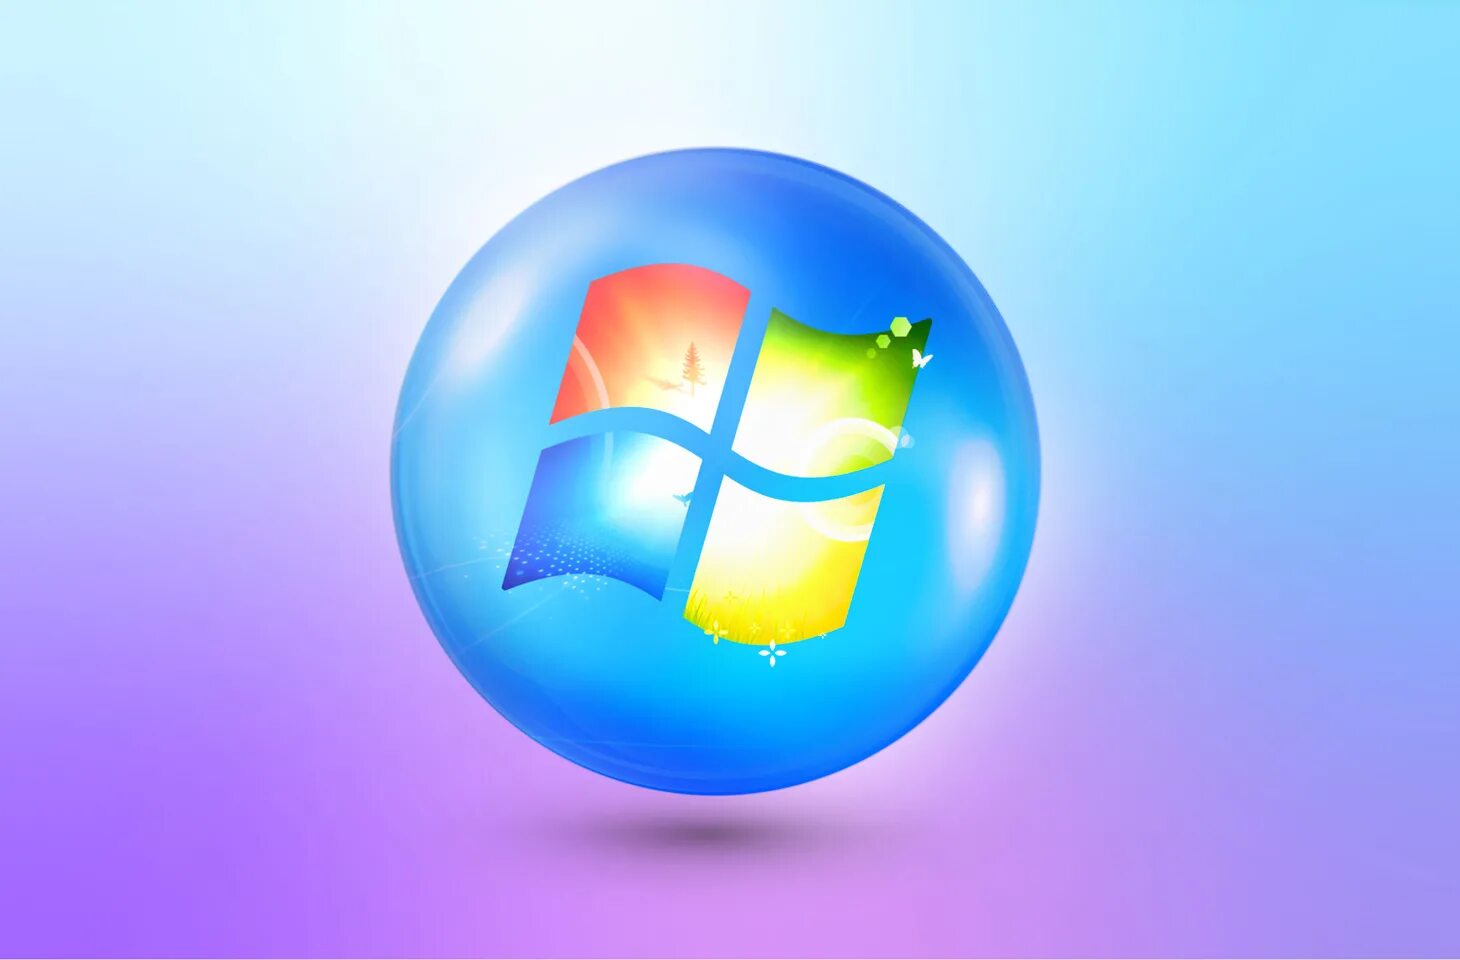 Windows gameplay. Виндовс 7. Обои виндовс 7. Фон Windows 7. Операционная система Windows 7.